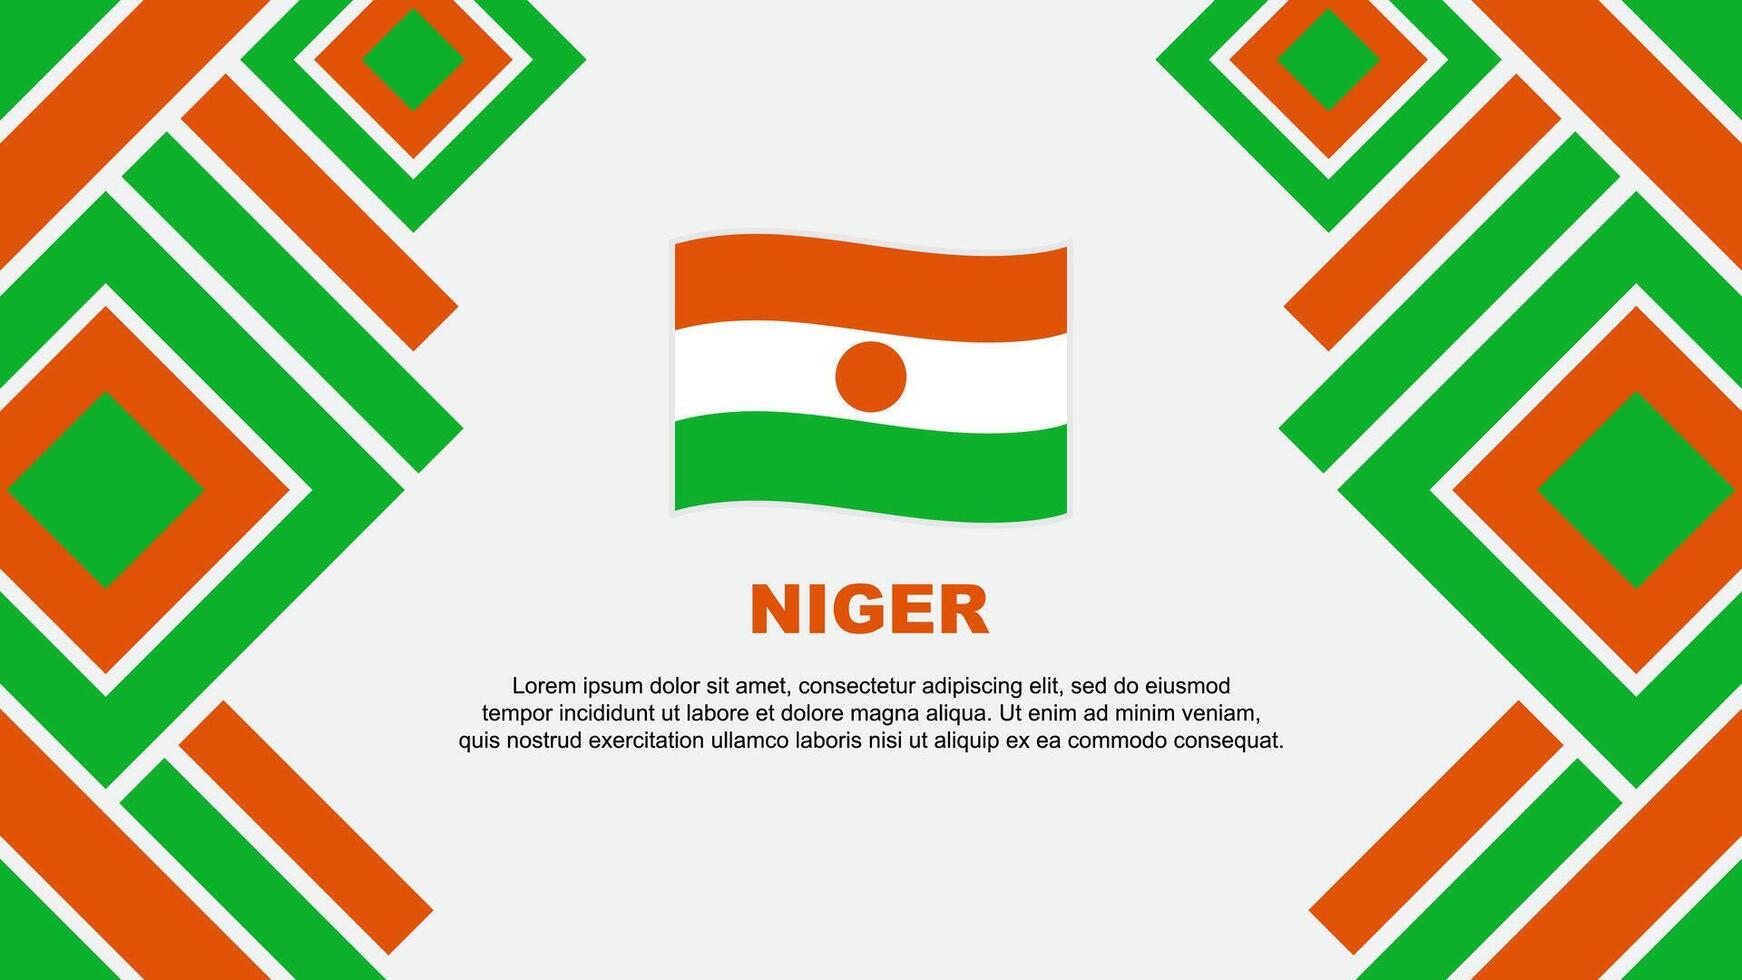 Niger Flag Abstract Background Design Template. Niger Independence Day Banner Wallpaper Vector Illustration. Niger